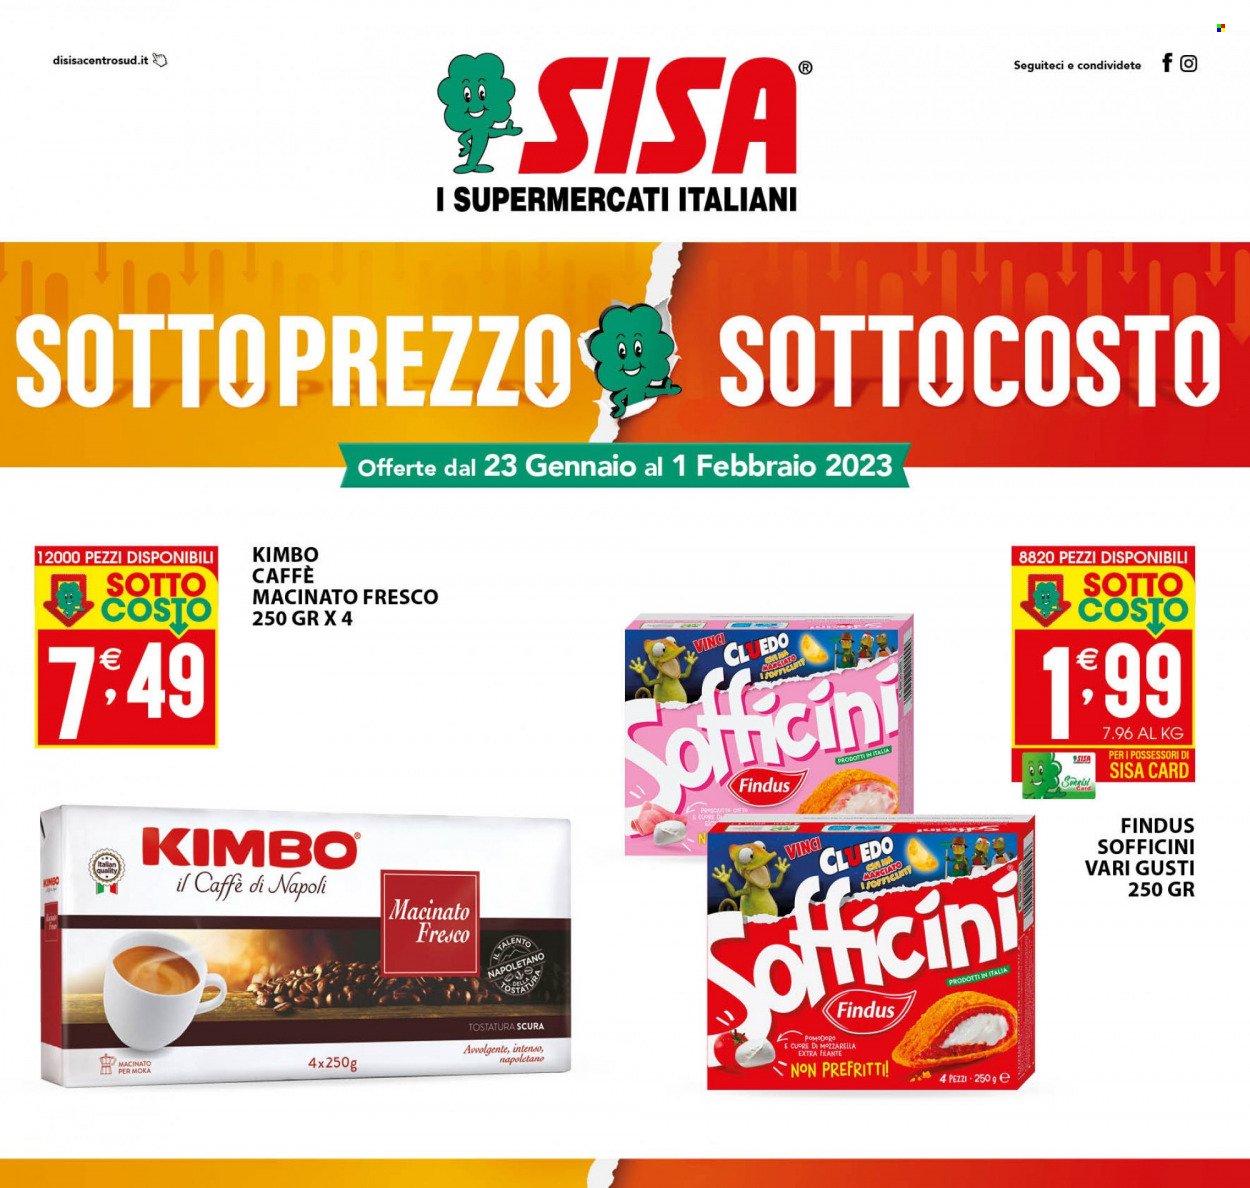 thumbnail - Volantino SISA - 23/1/2023 - 1/2/2023 - Prodotti in offerta - pomodori, Findus, Sofficini, Kimbo, caffè macinato. Pagina 1.